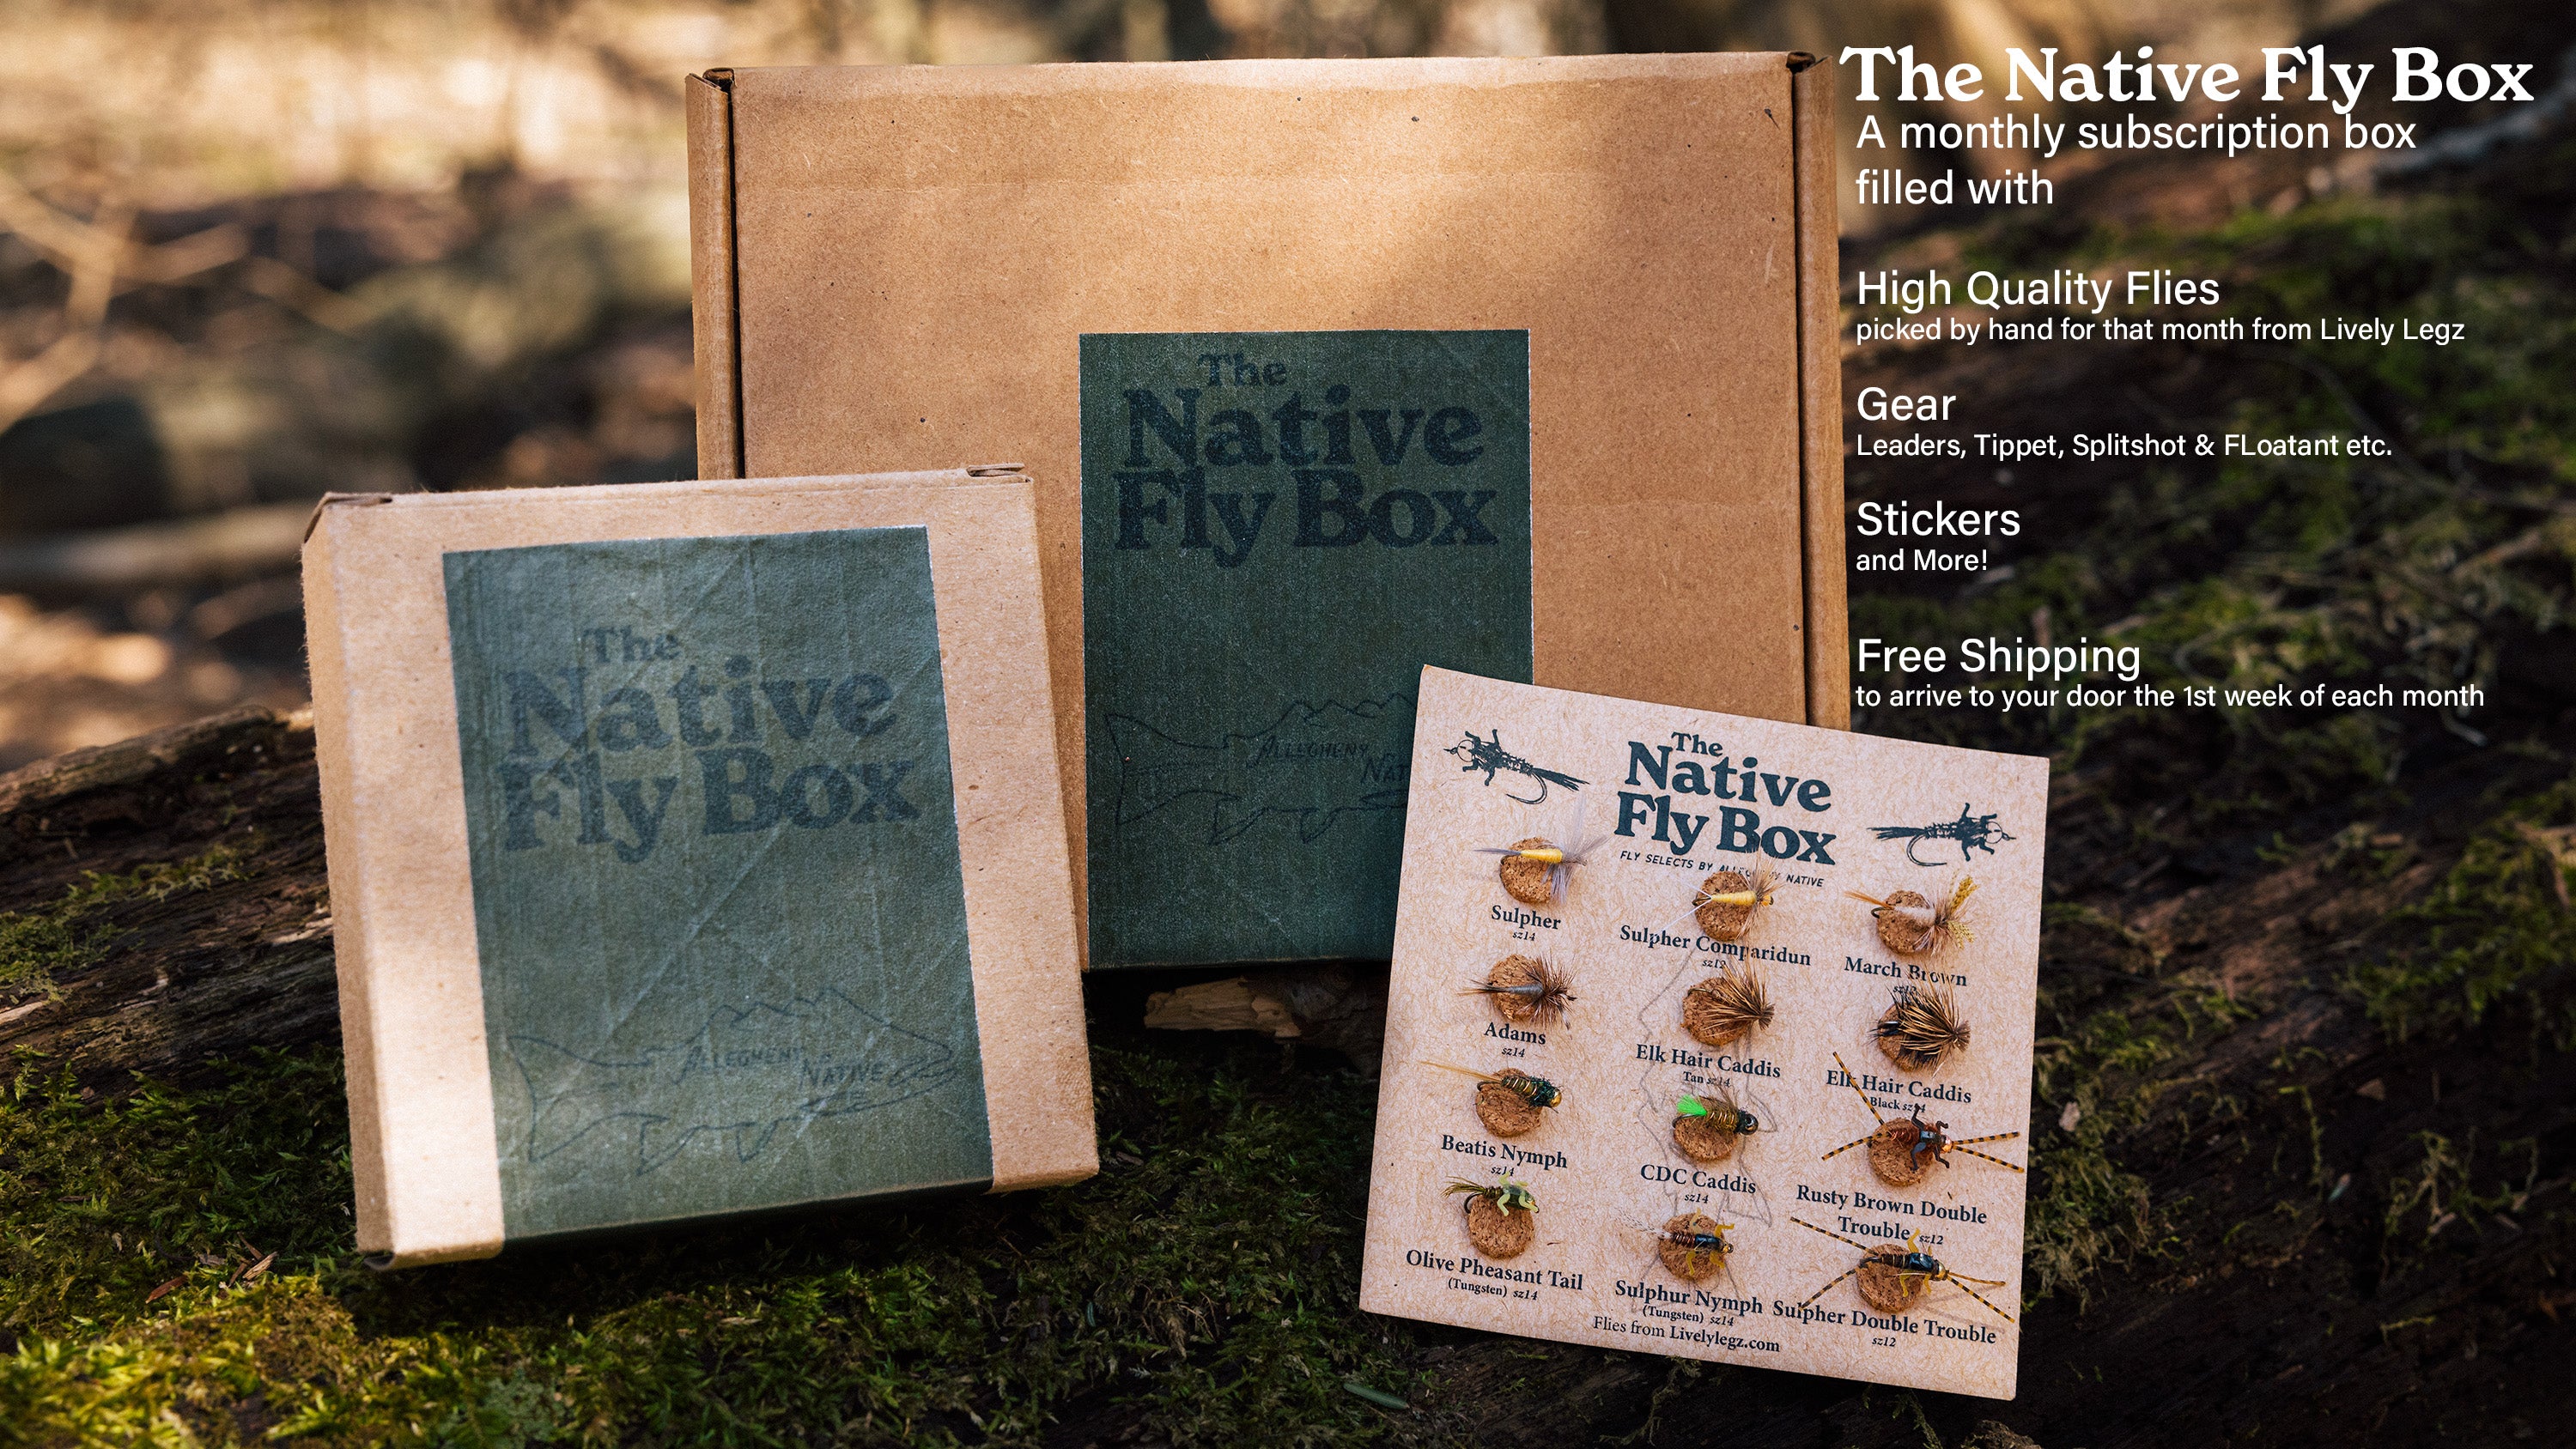 The Native Fly Box